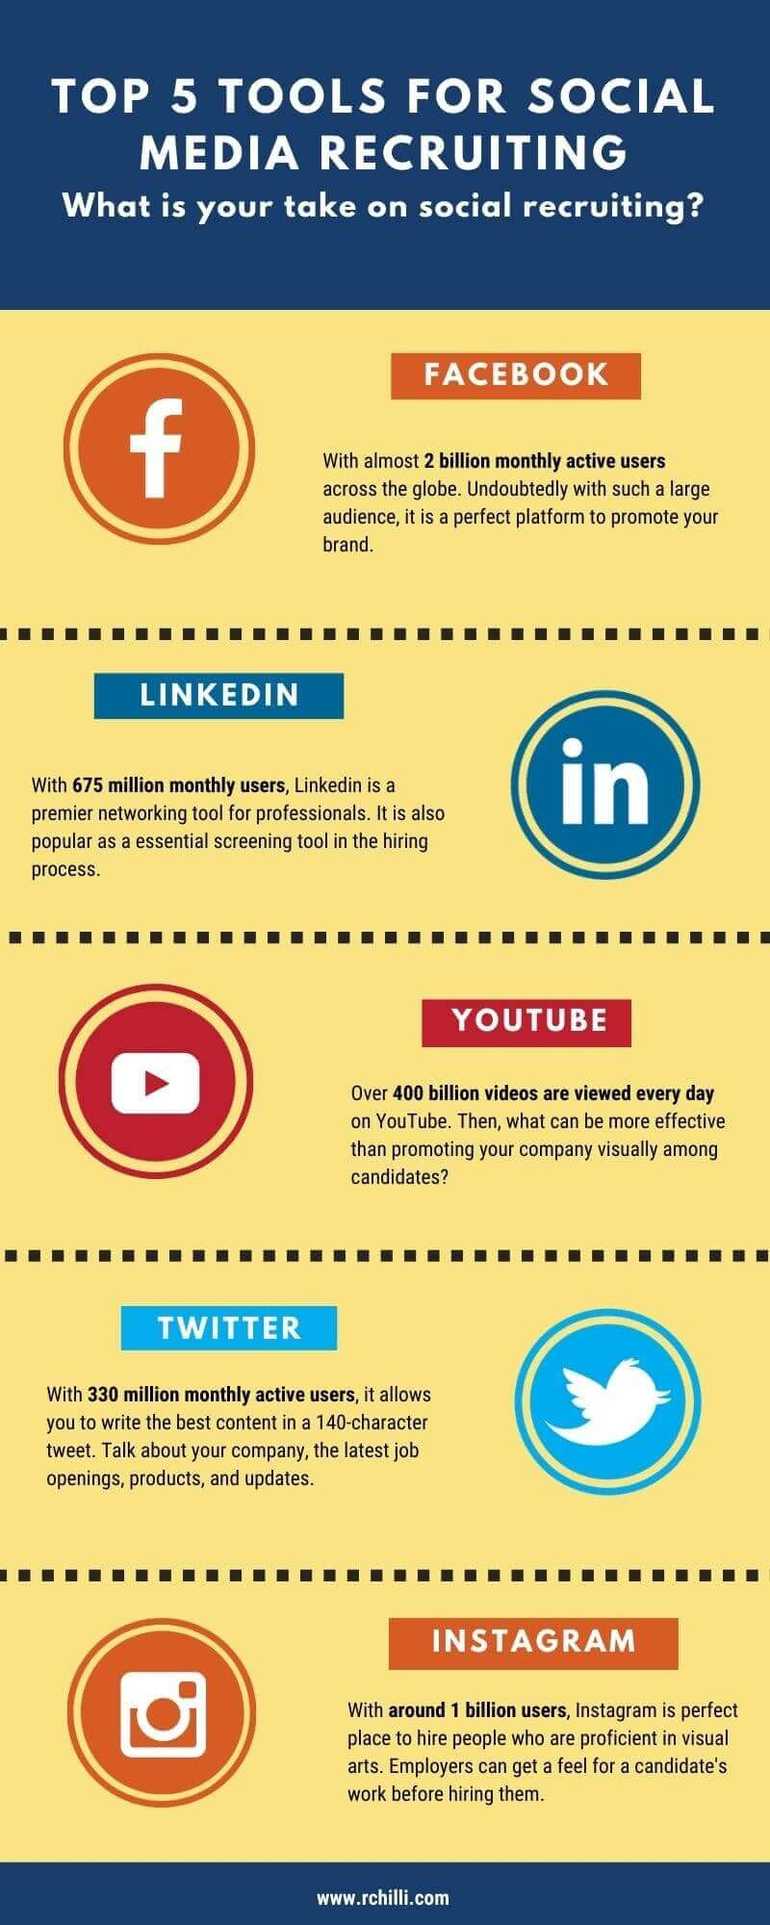 Top 5 Tools for Social Media Recruiting